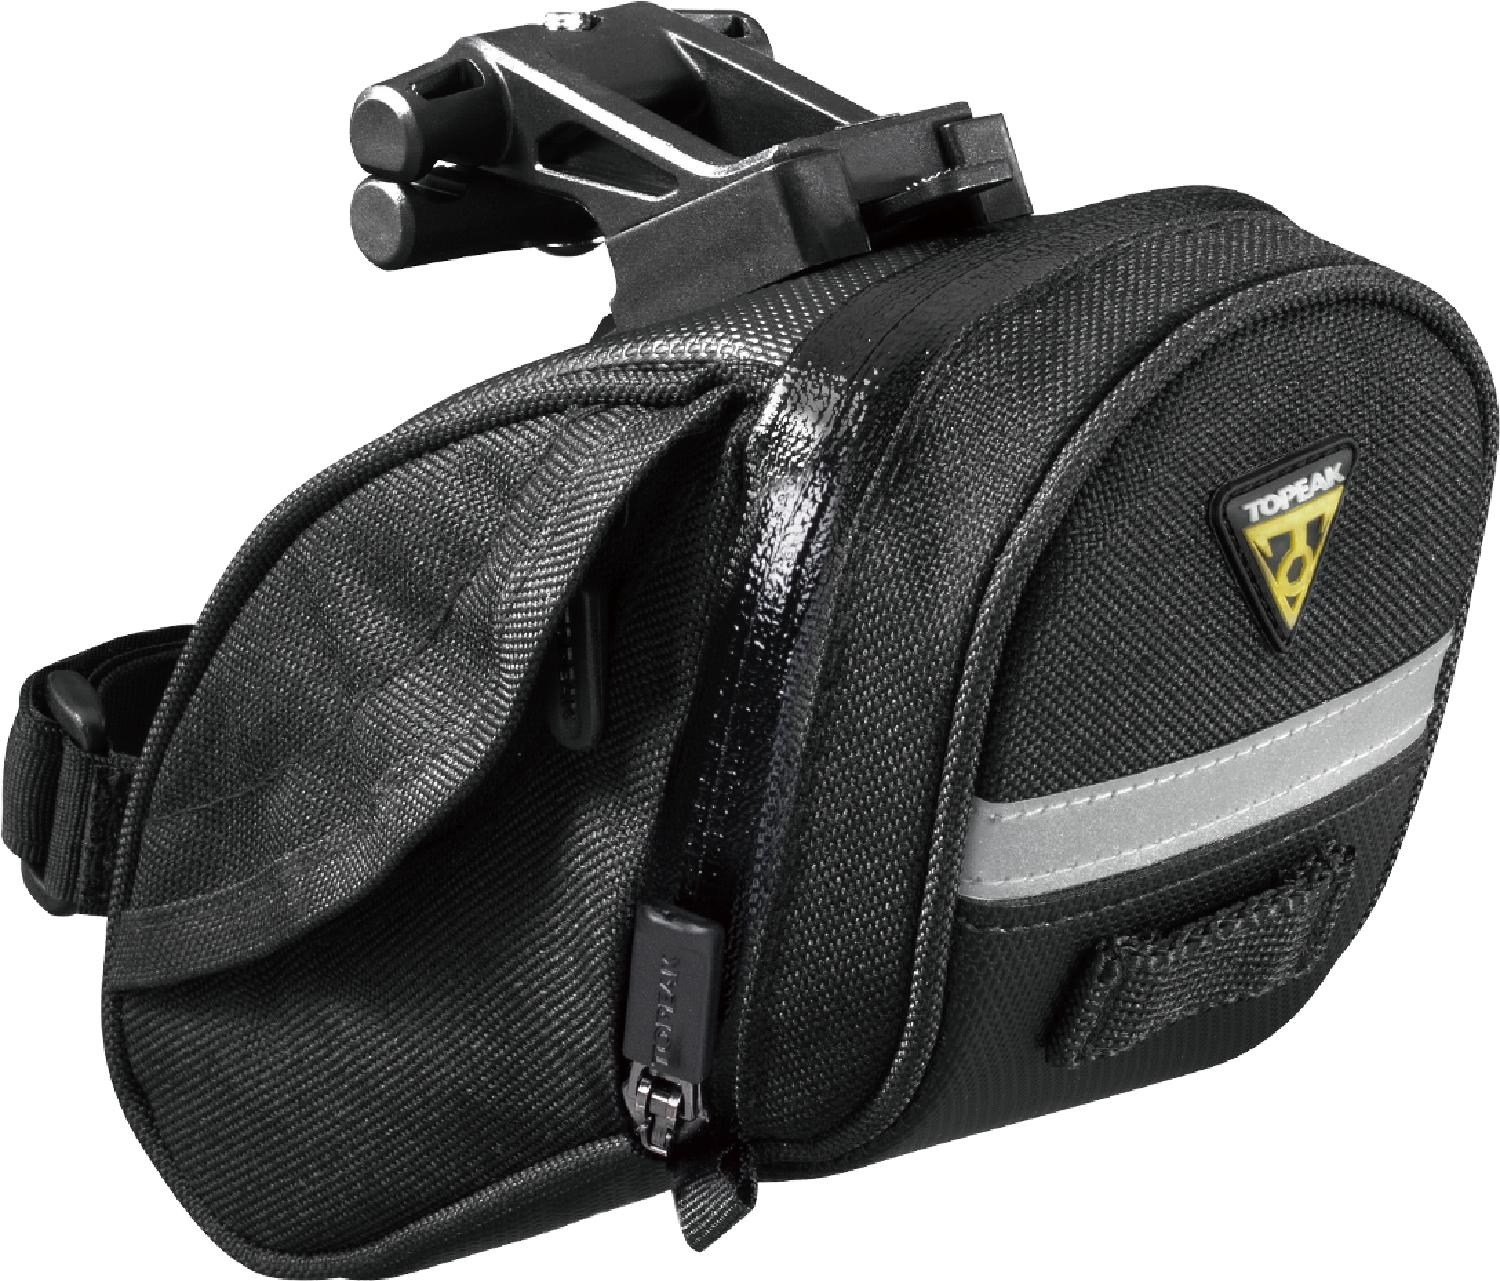 Topeak Aero Wedge DX Seat Bag - Medium ($19.93)